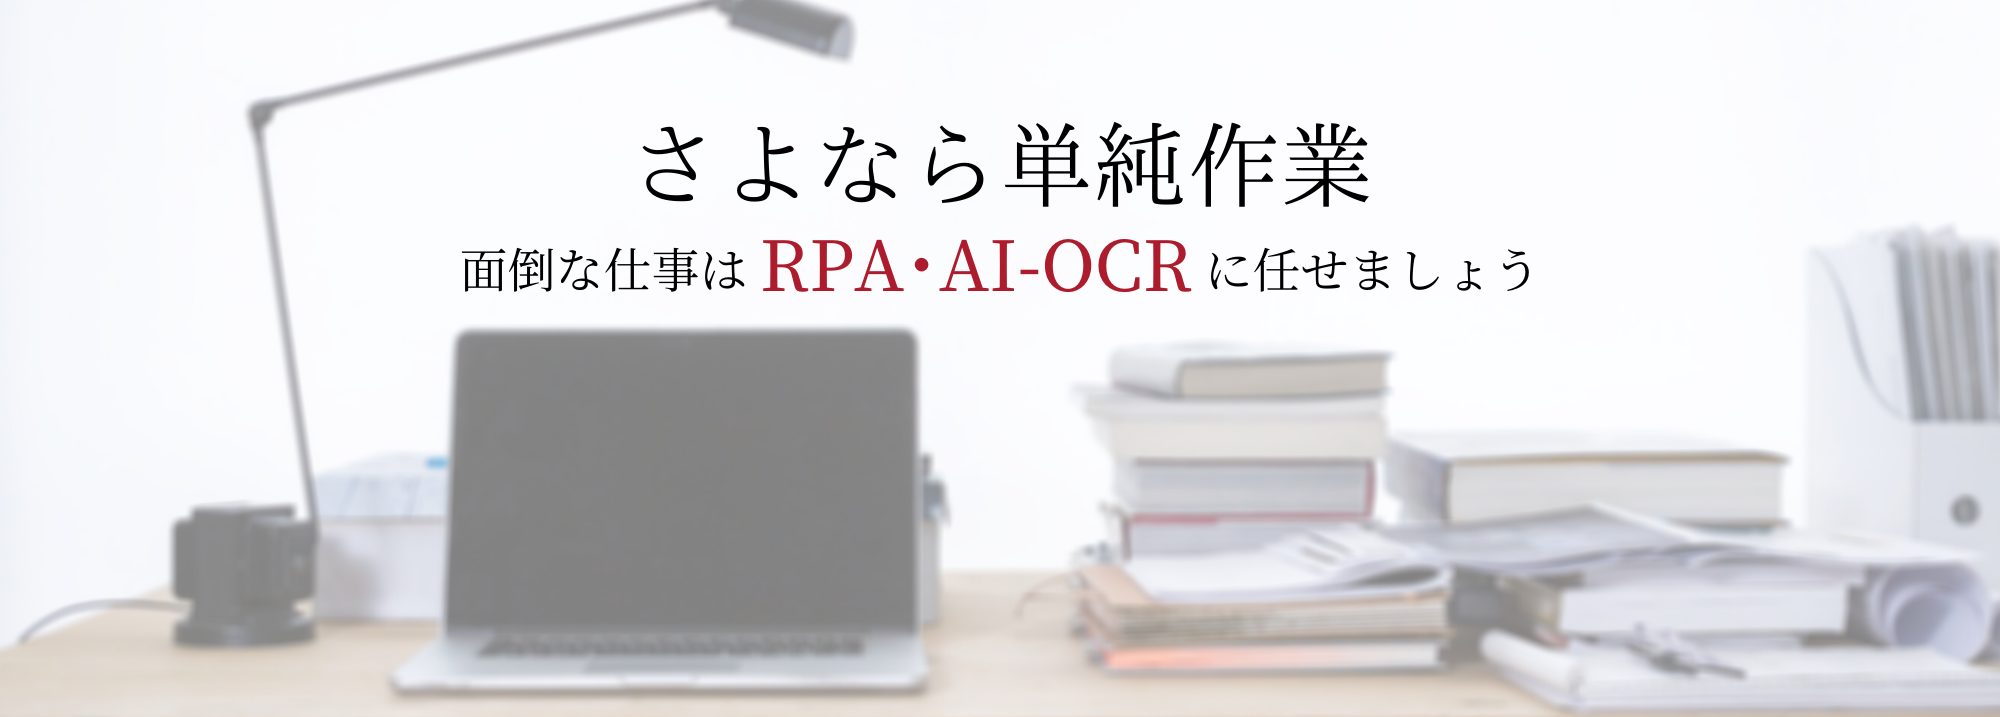 NDK-単純作業-RPA-AI-OCR